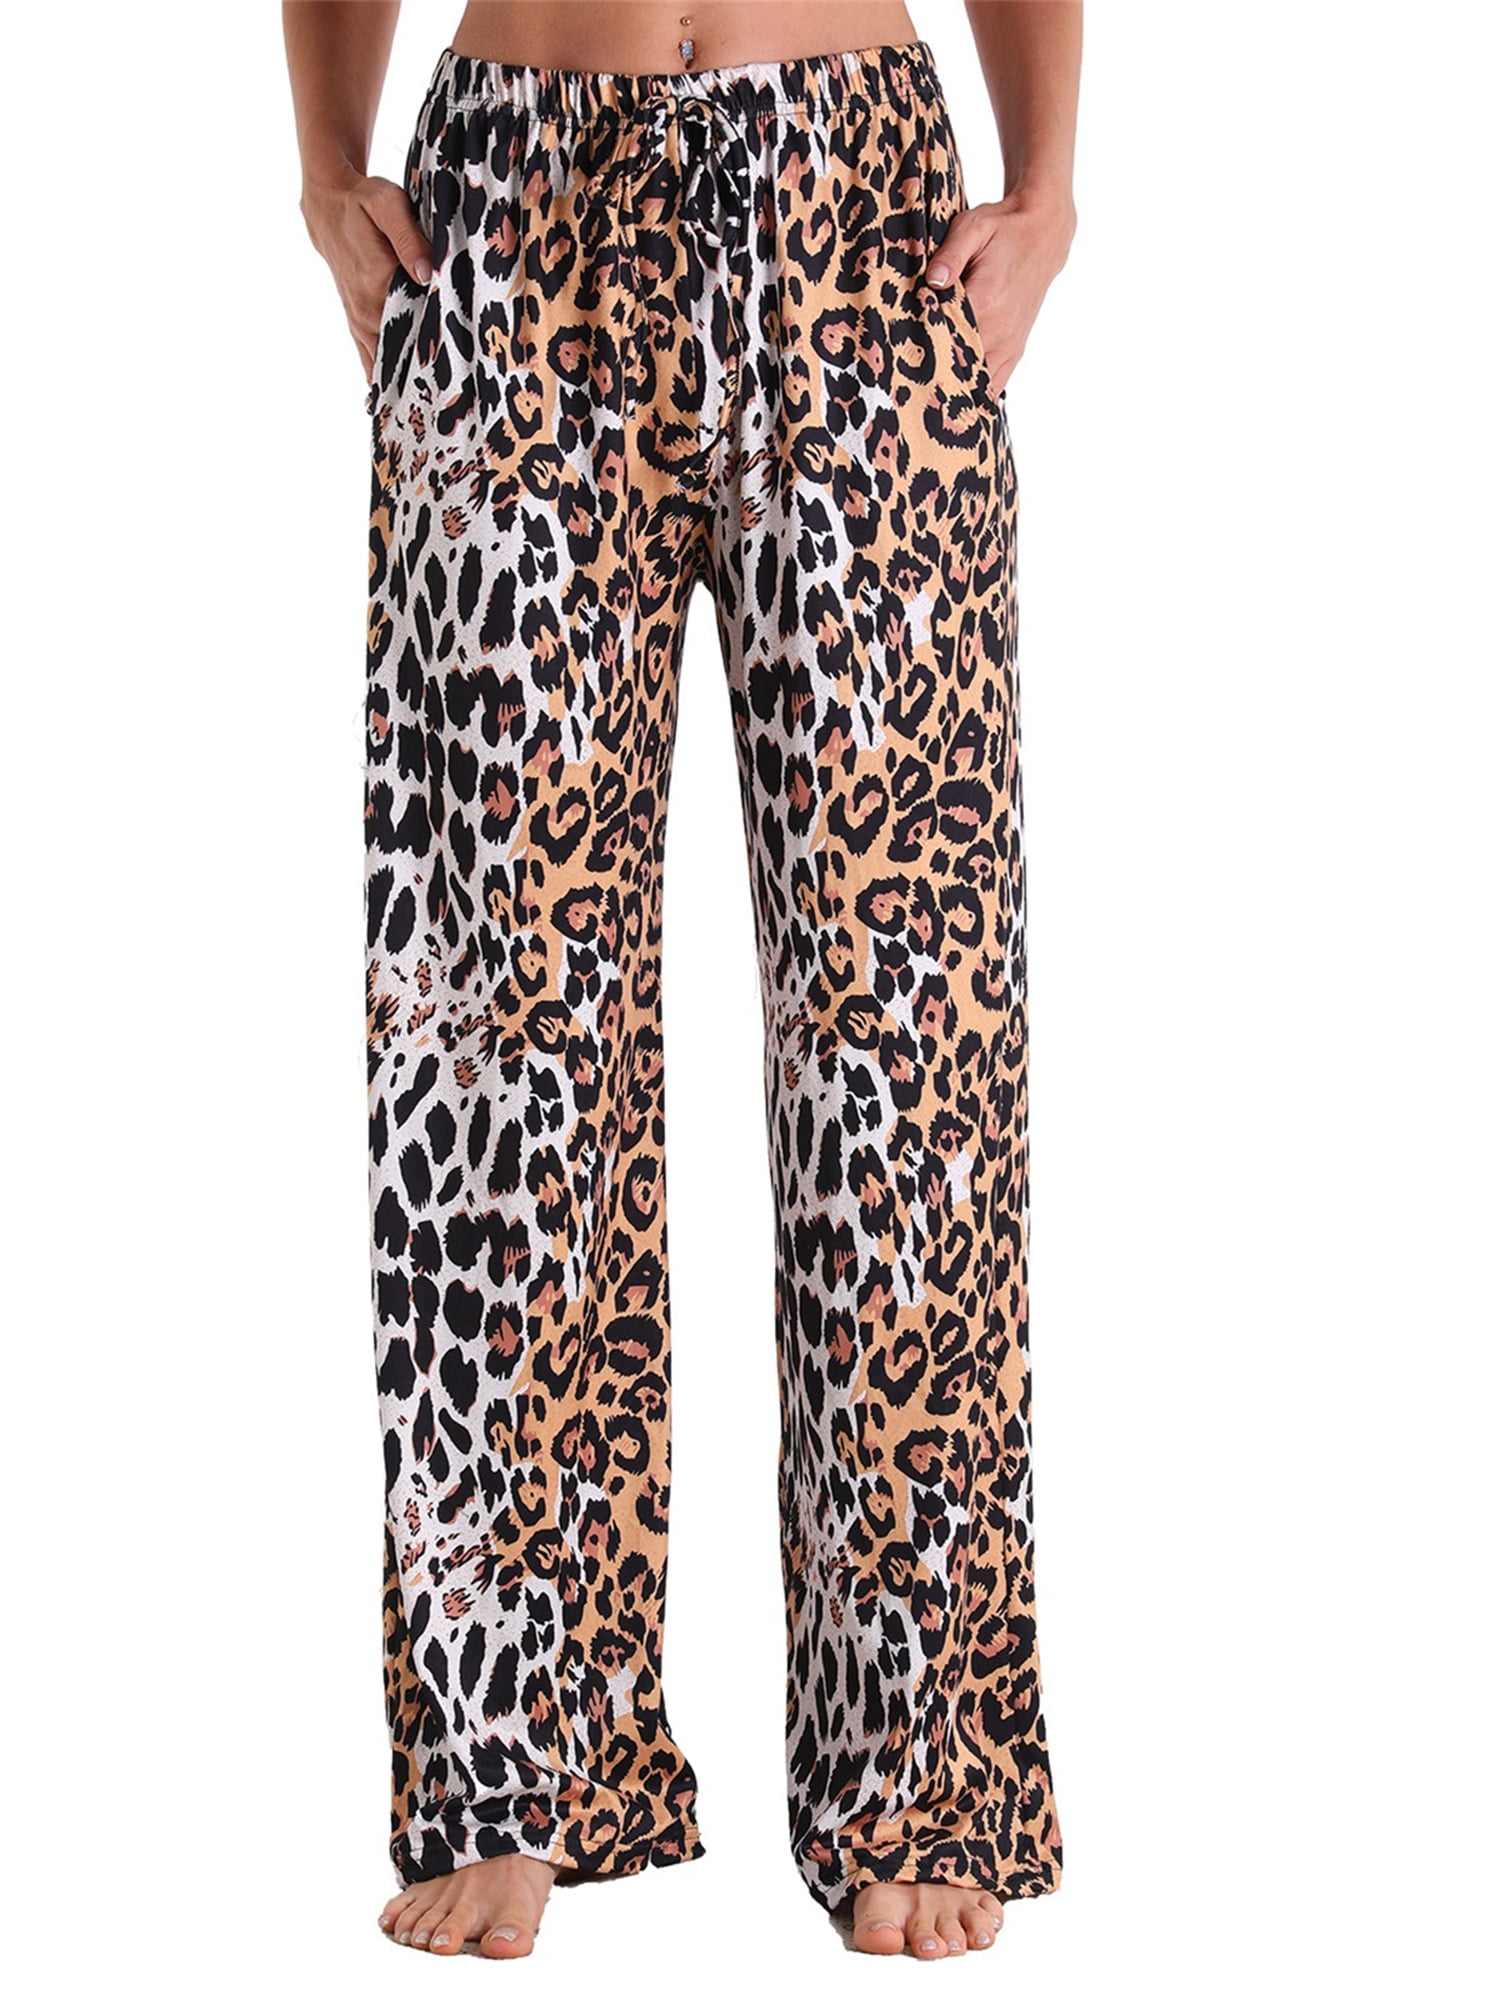 Details about   Leopard Print Loungewear Bottom